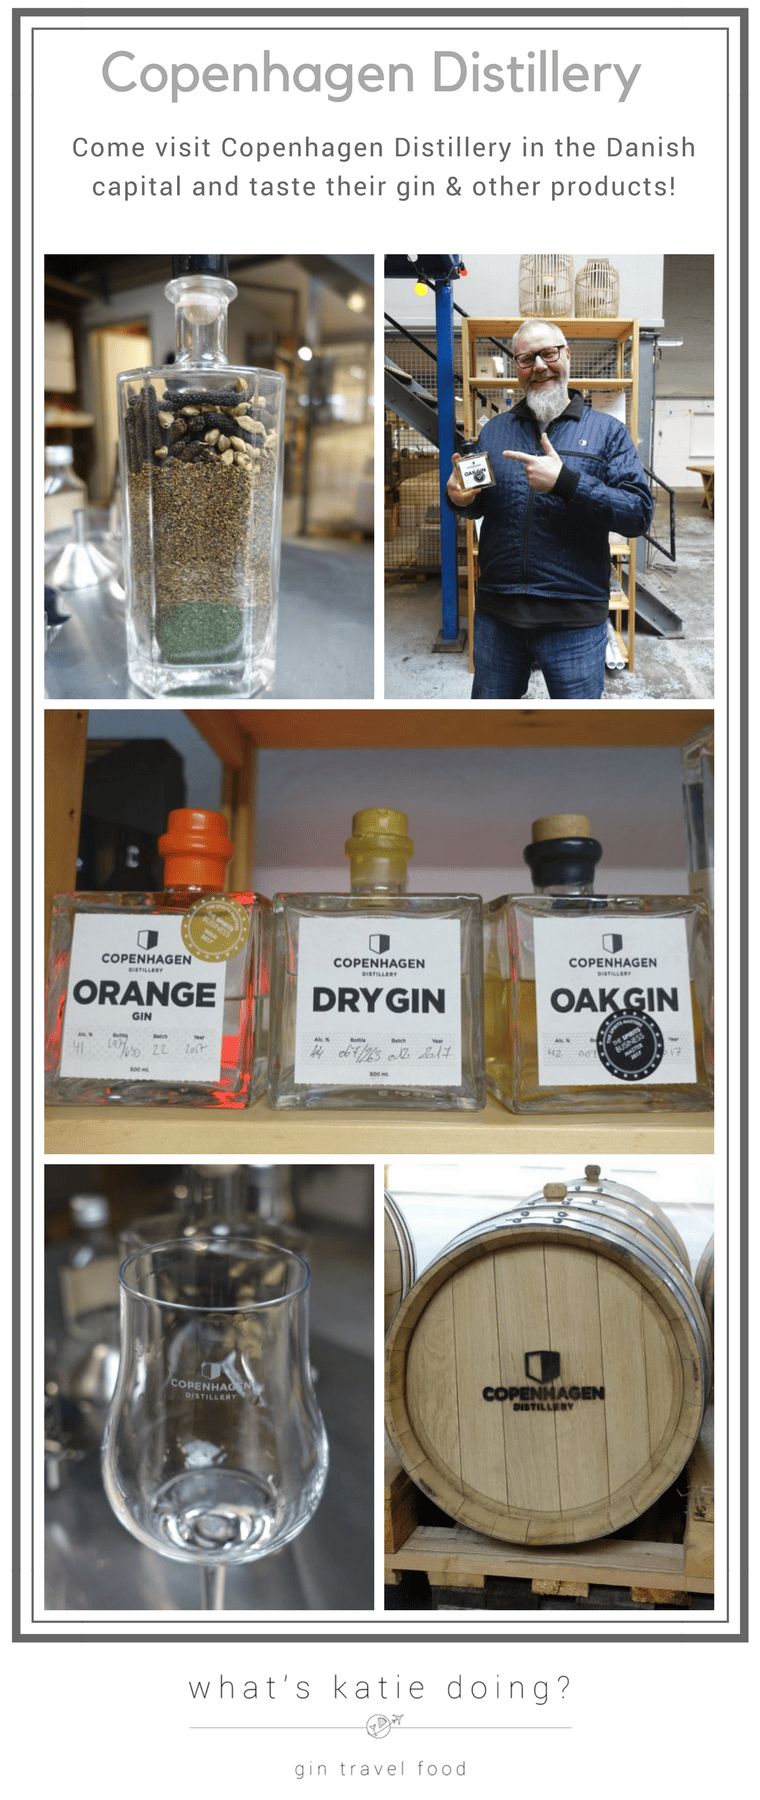 Pinterest image for Copenhagen Distillery visit